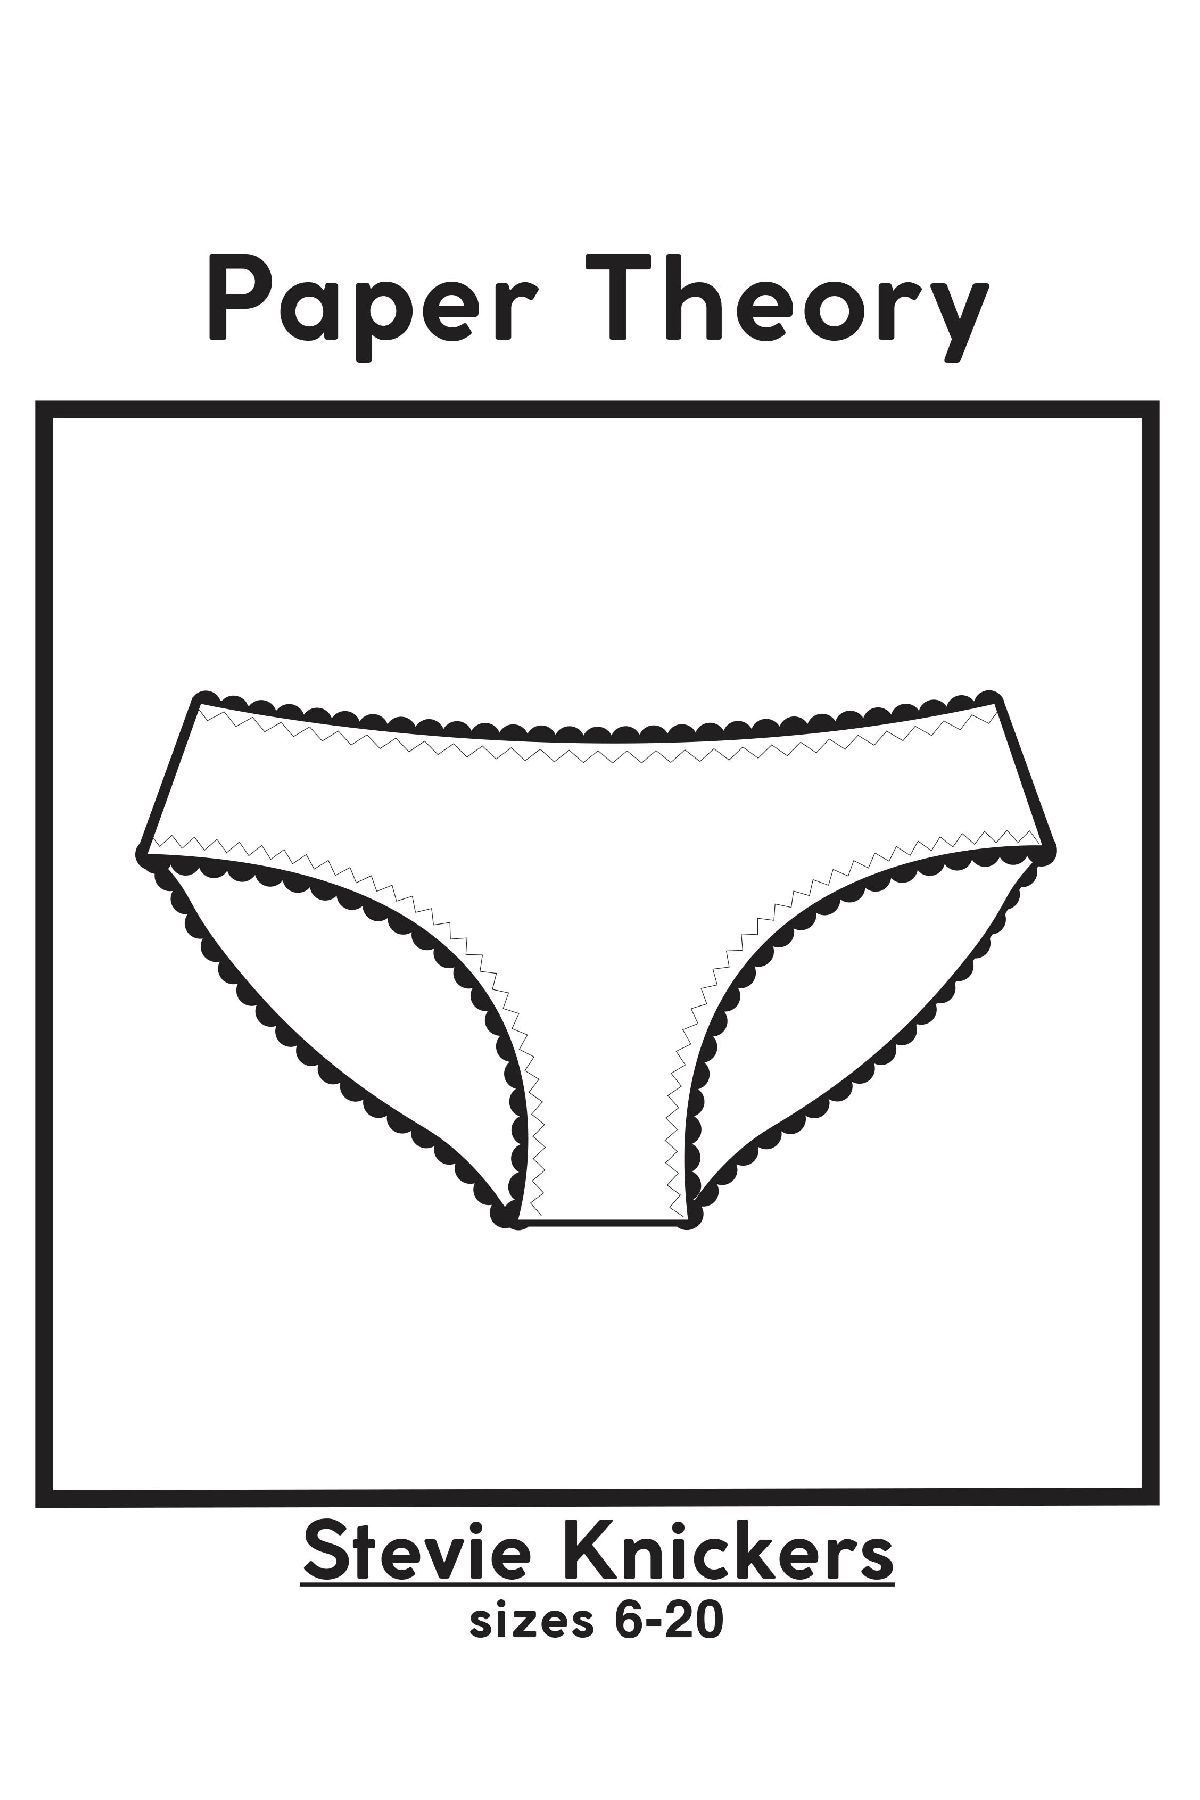 Stevie Knickers PDF Pattern – Paper Theory Patterns